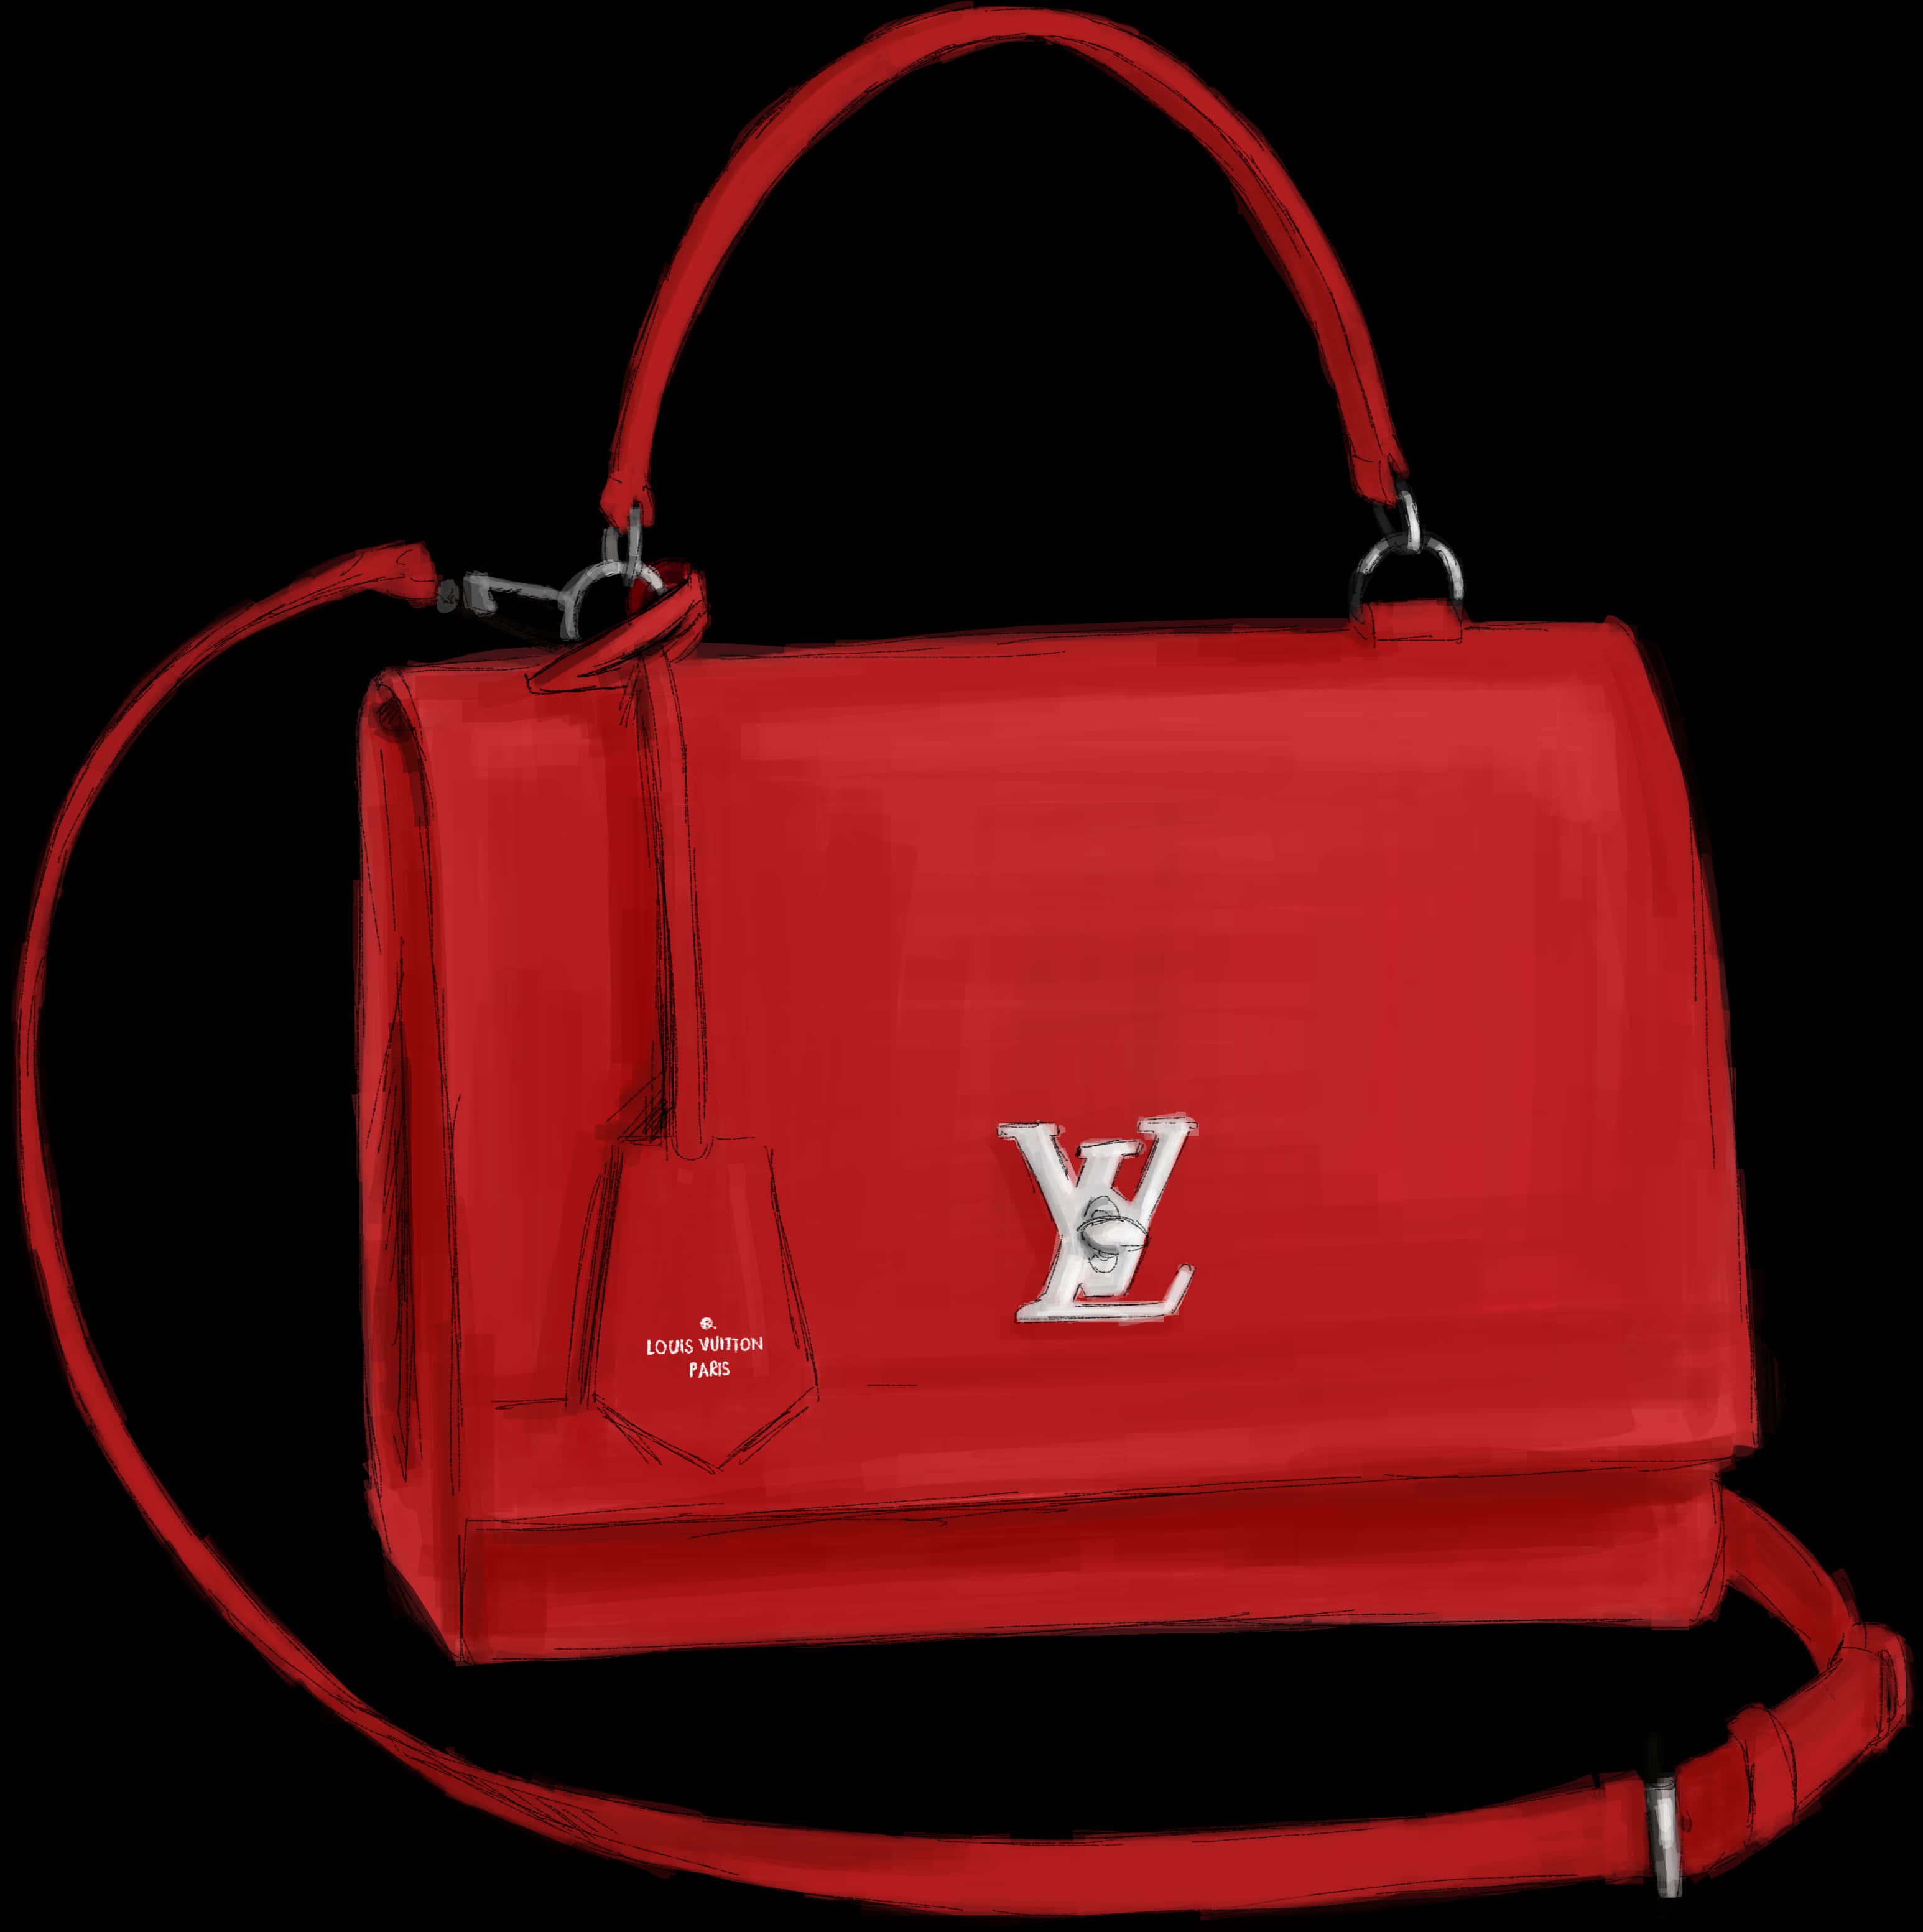 A Red Handbag With A Strap